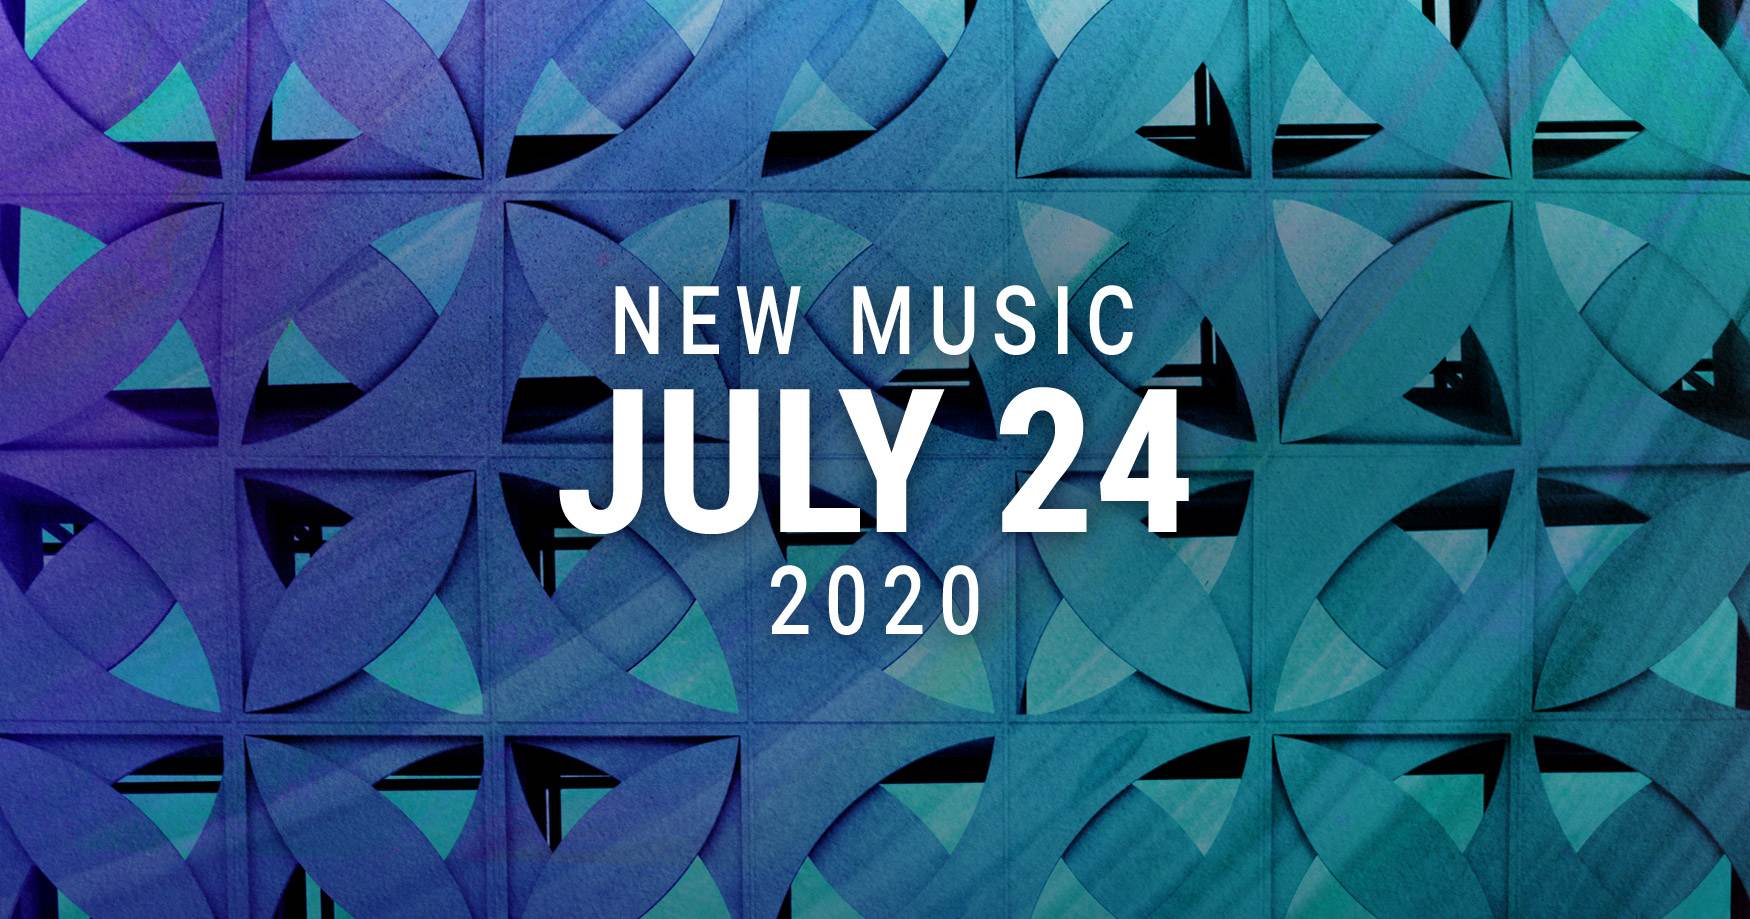 New Music July 24 2020